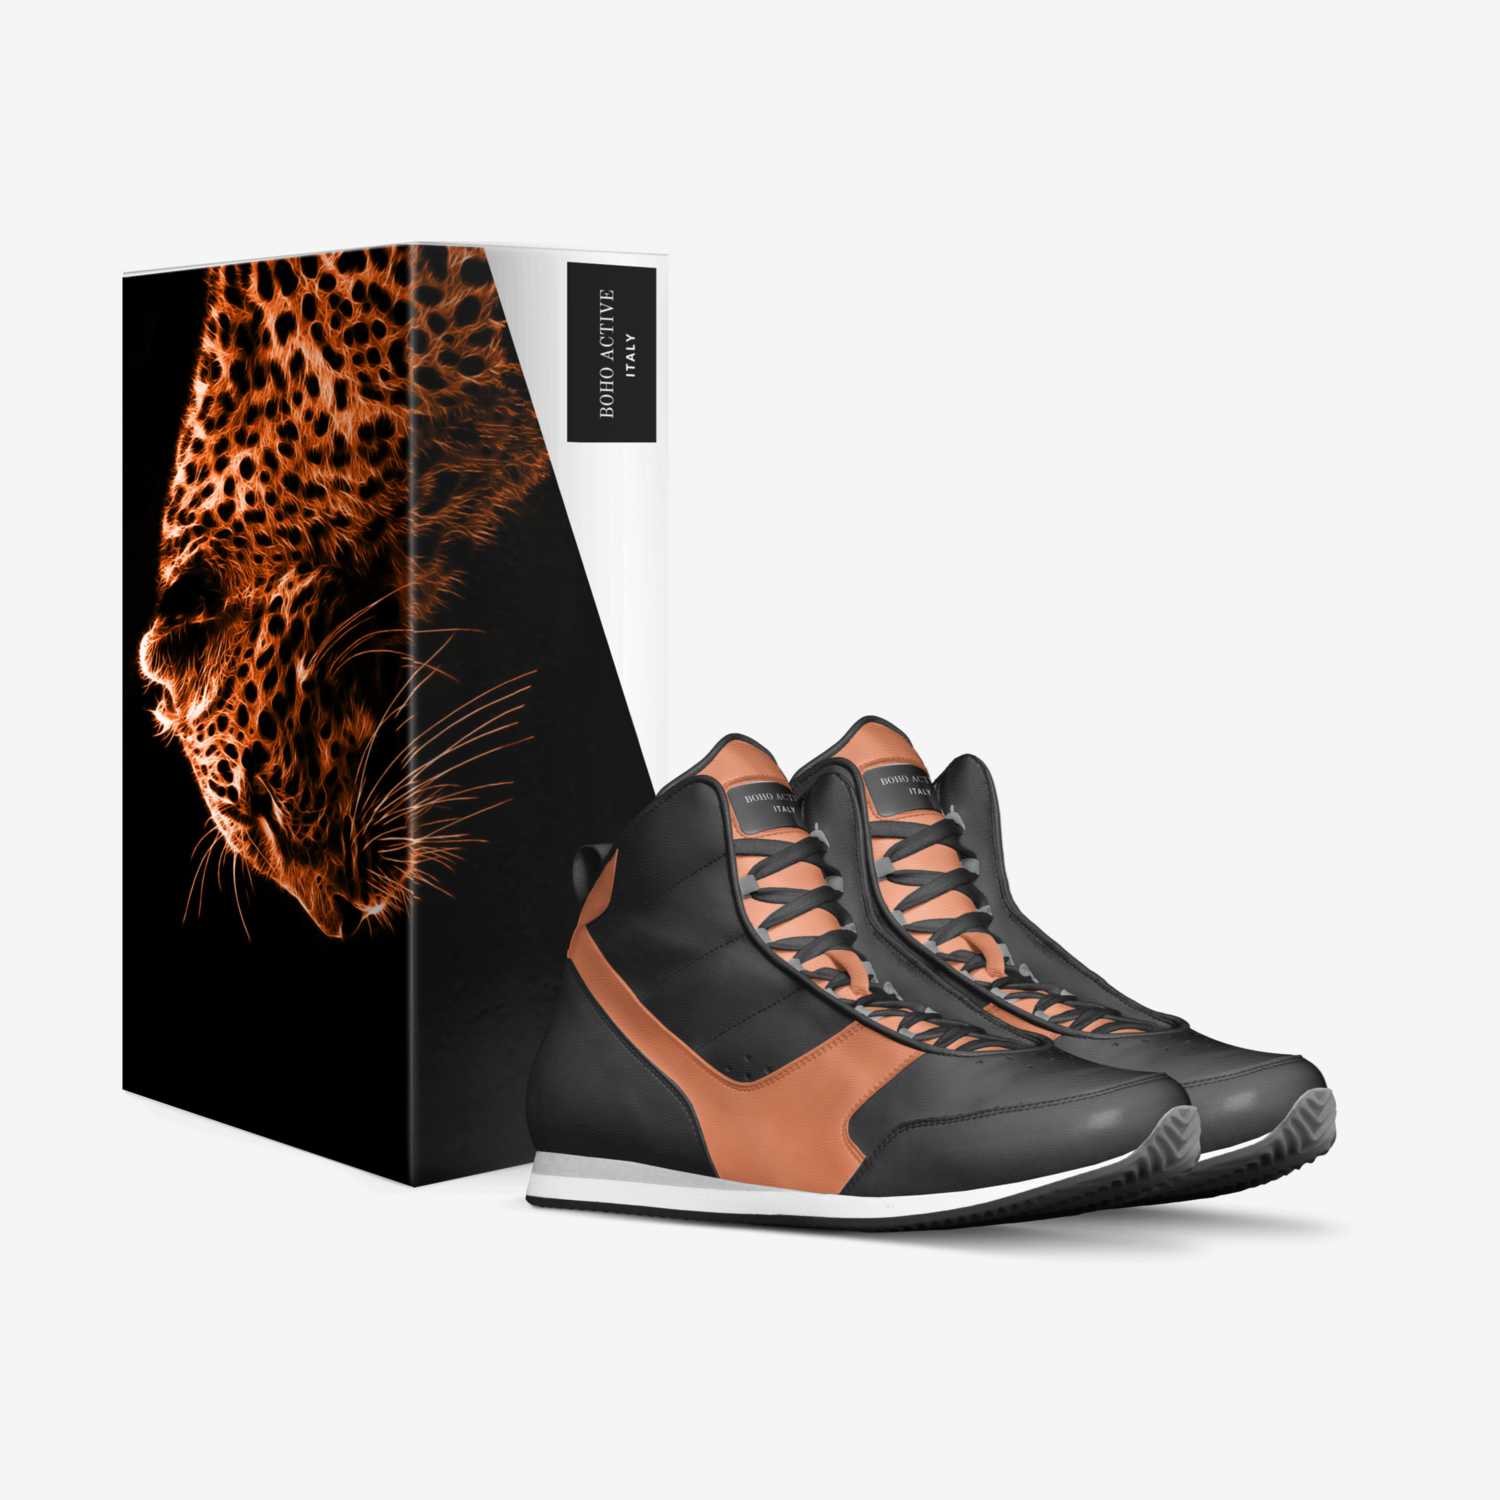 BOHO ACTIVE custom made in Italy shoes by Marijke Verkerk | Box view